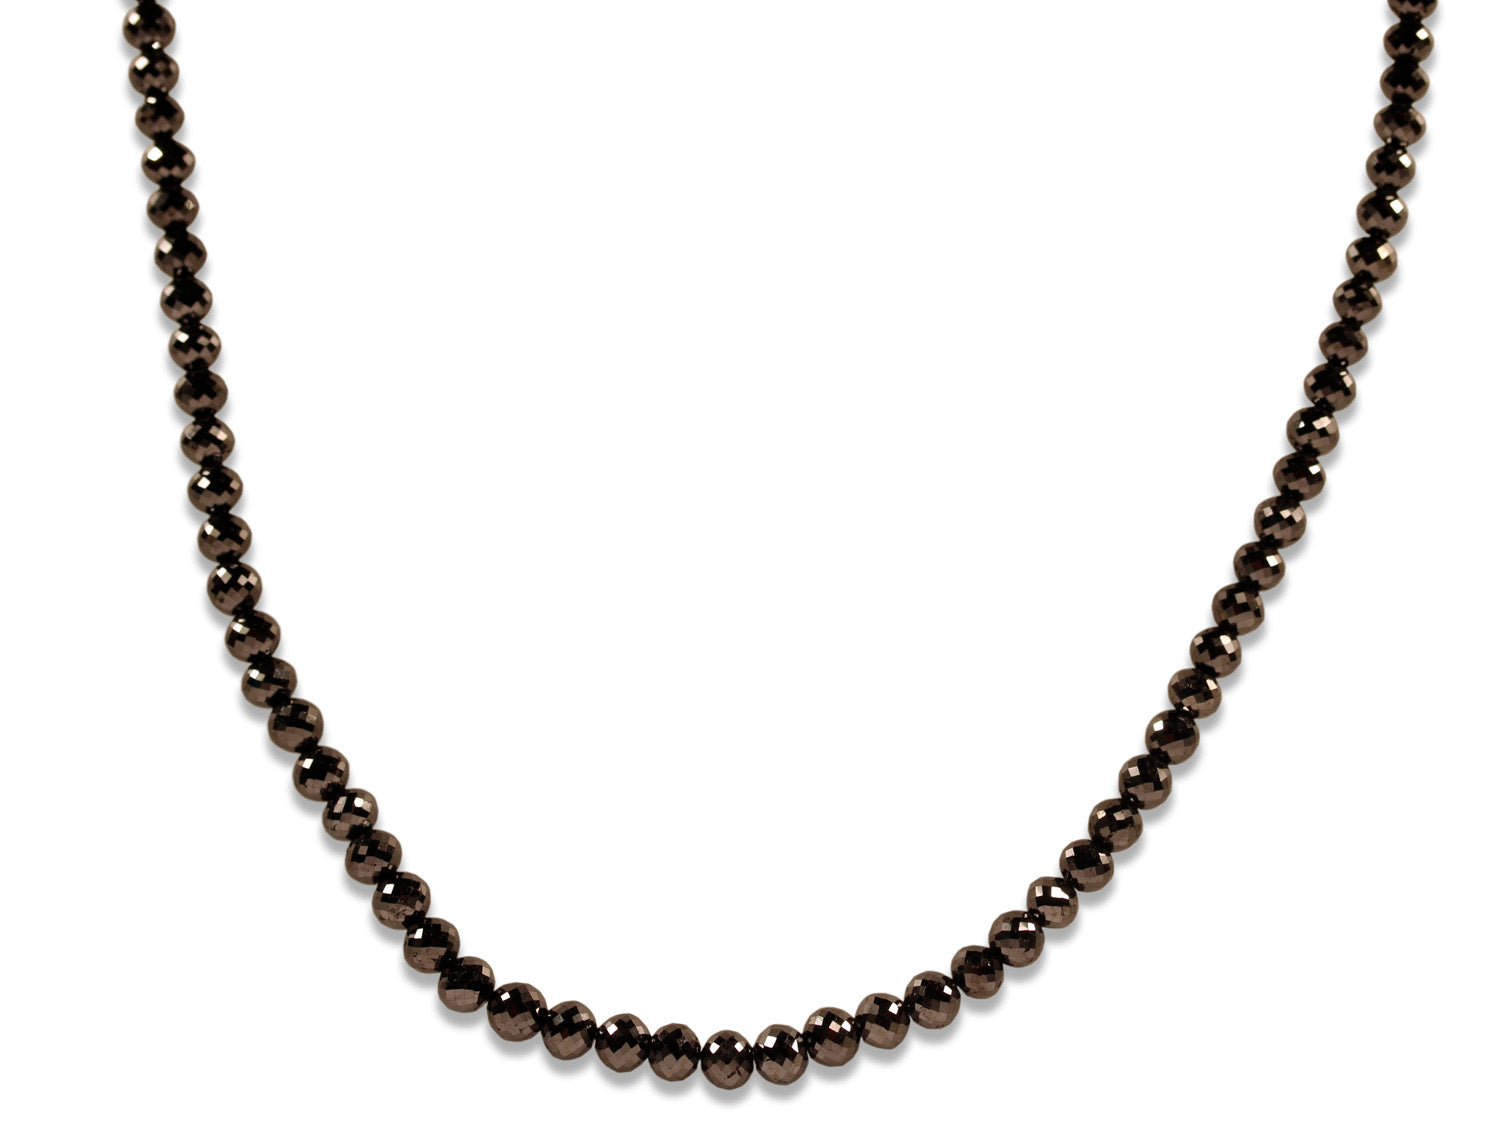 Natural Black Diamond Bead Necklace